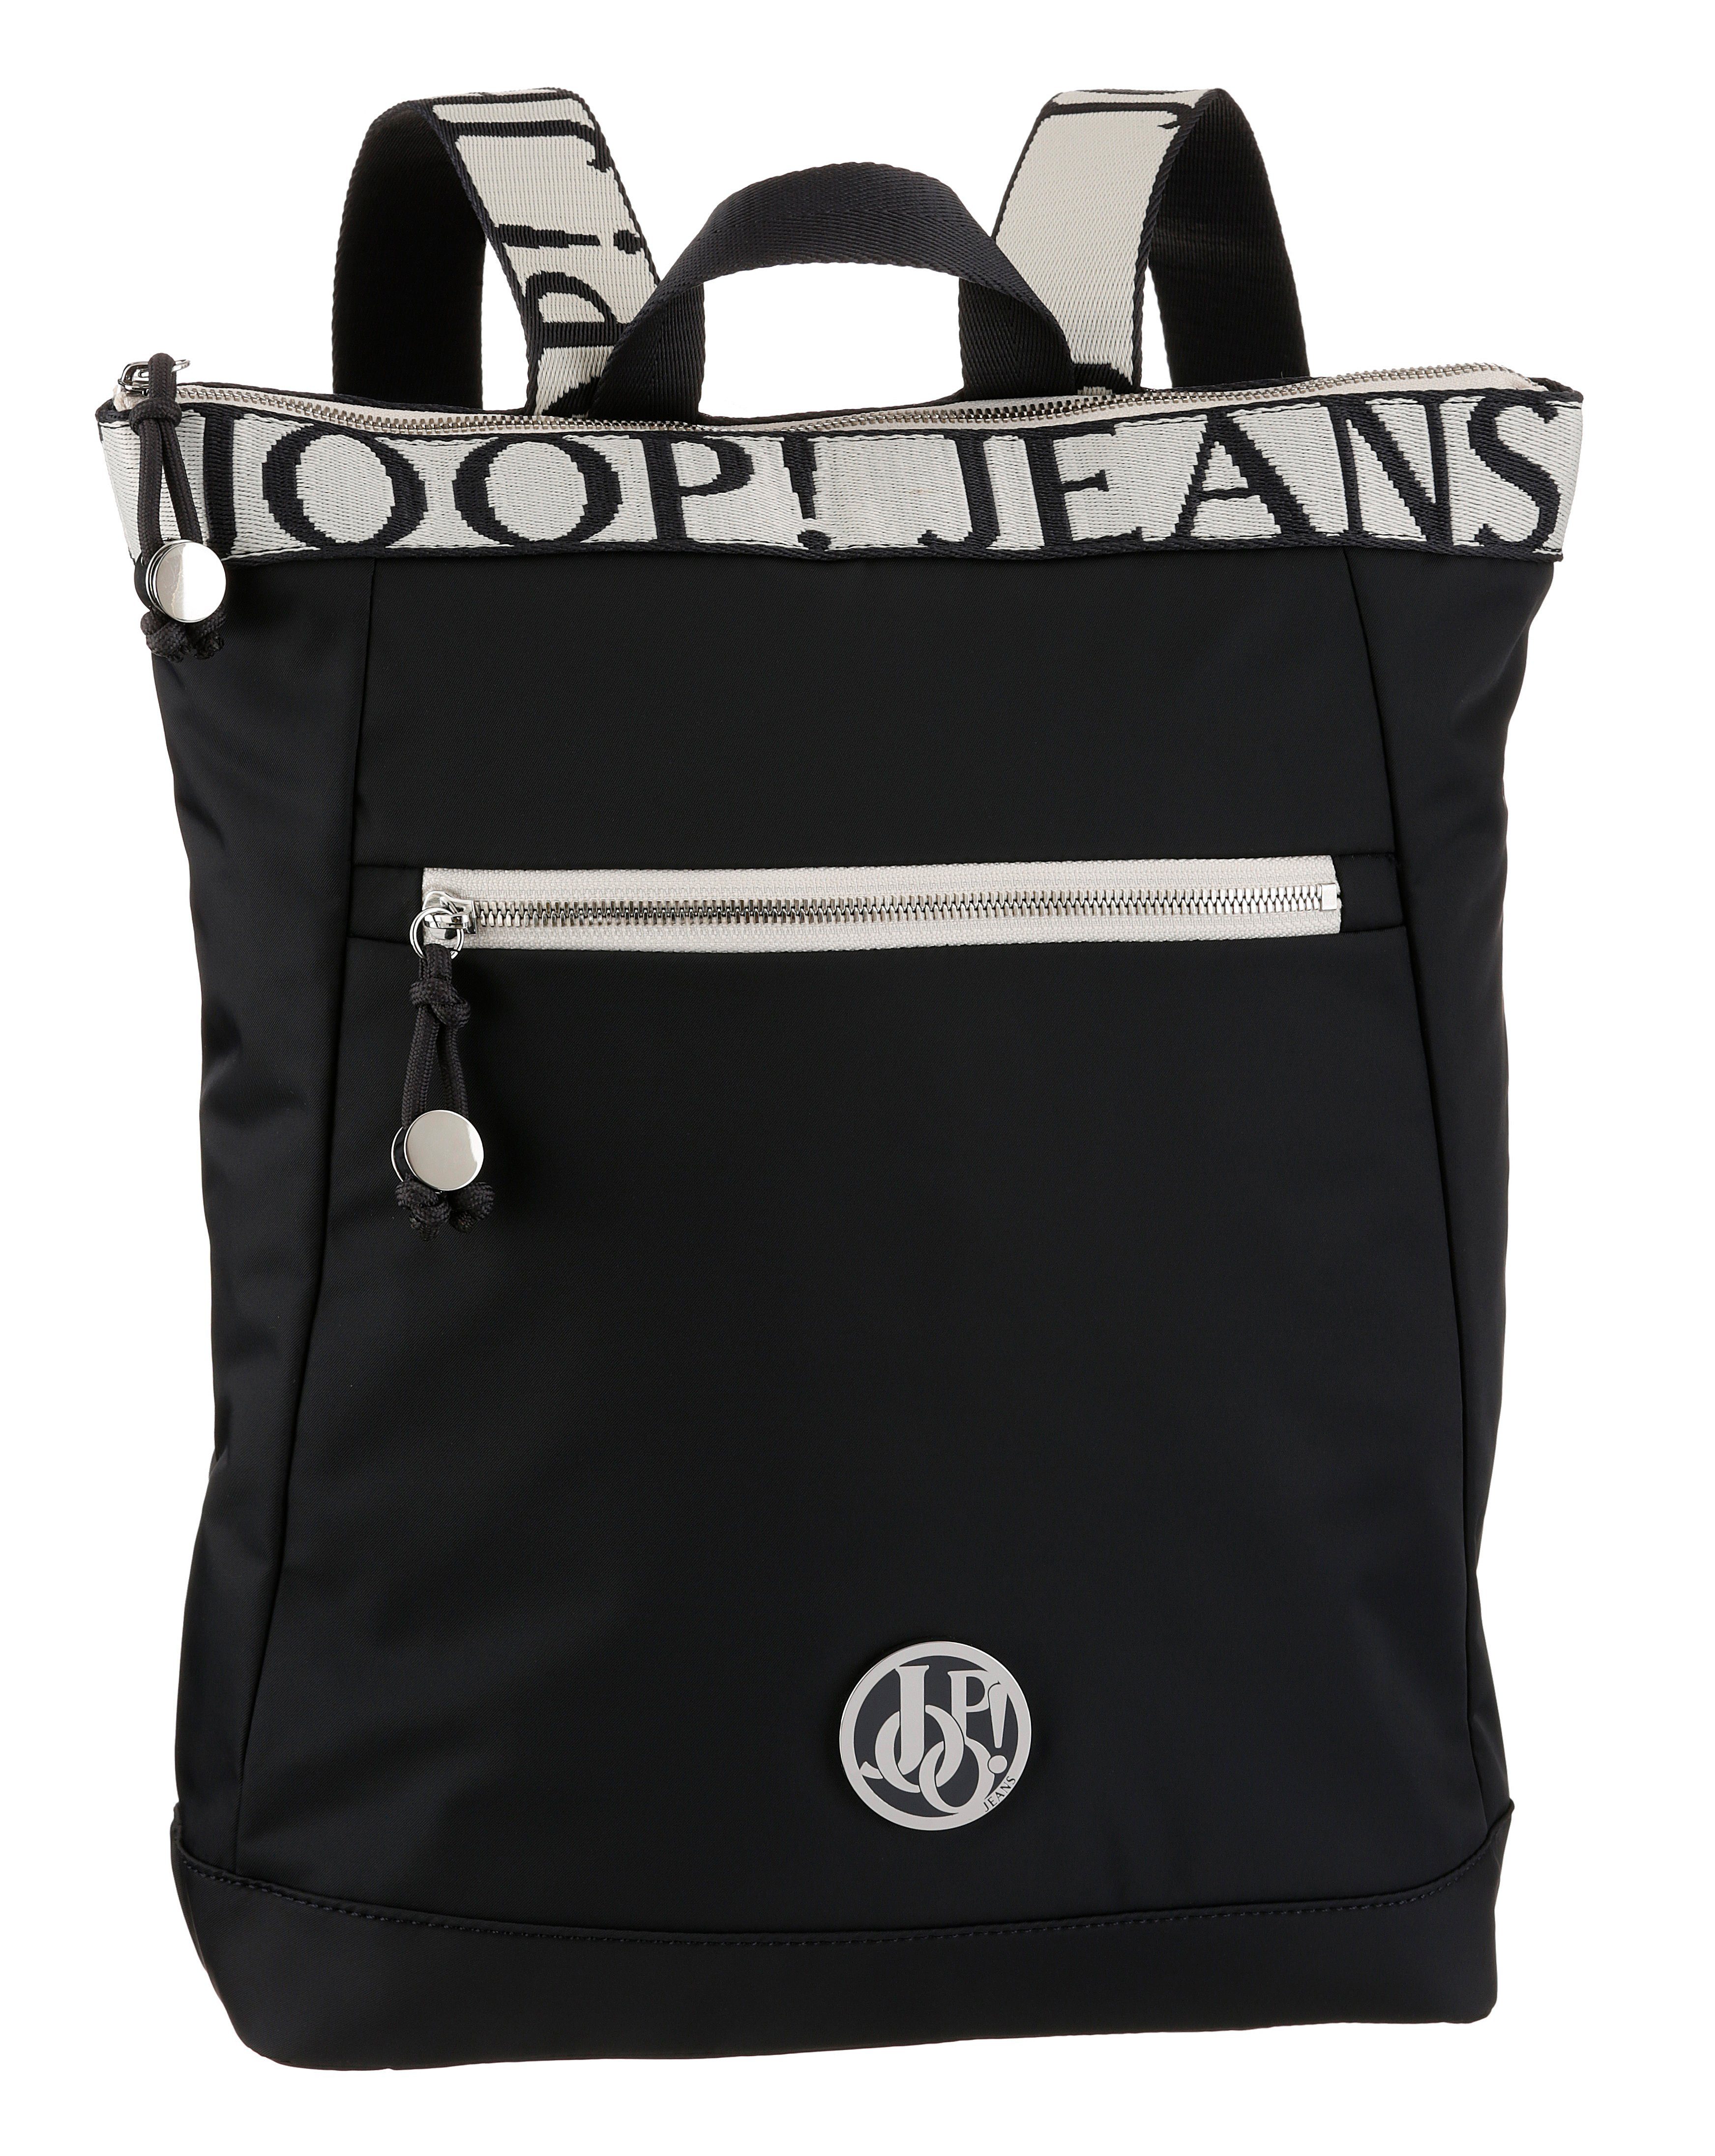 Joop Jeans Cityrucksack lietissimo elva backpack lvz, mit Logo Schriftzug auf den Trageriemen